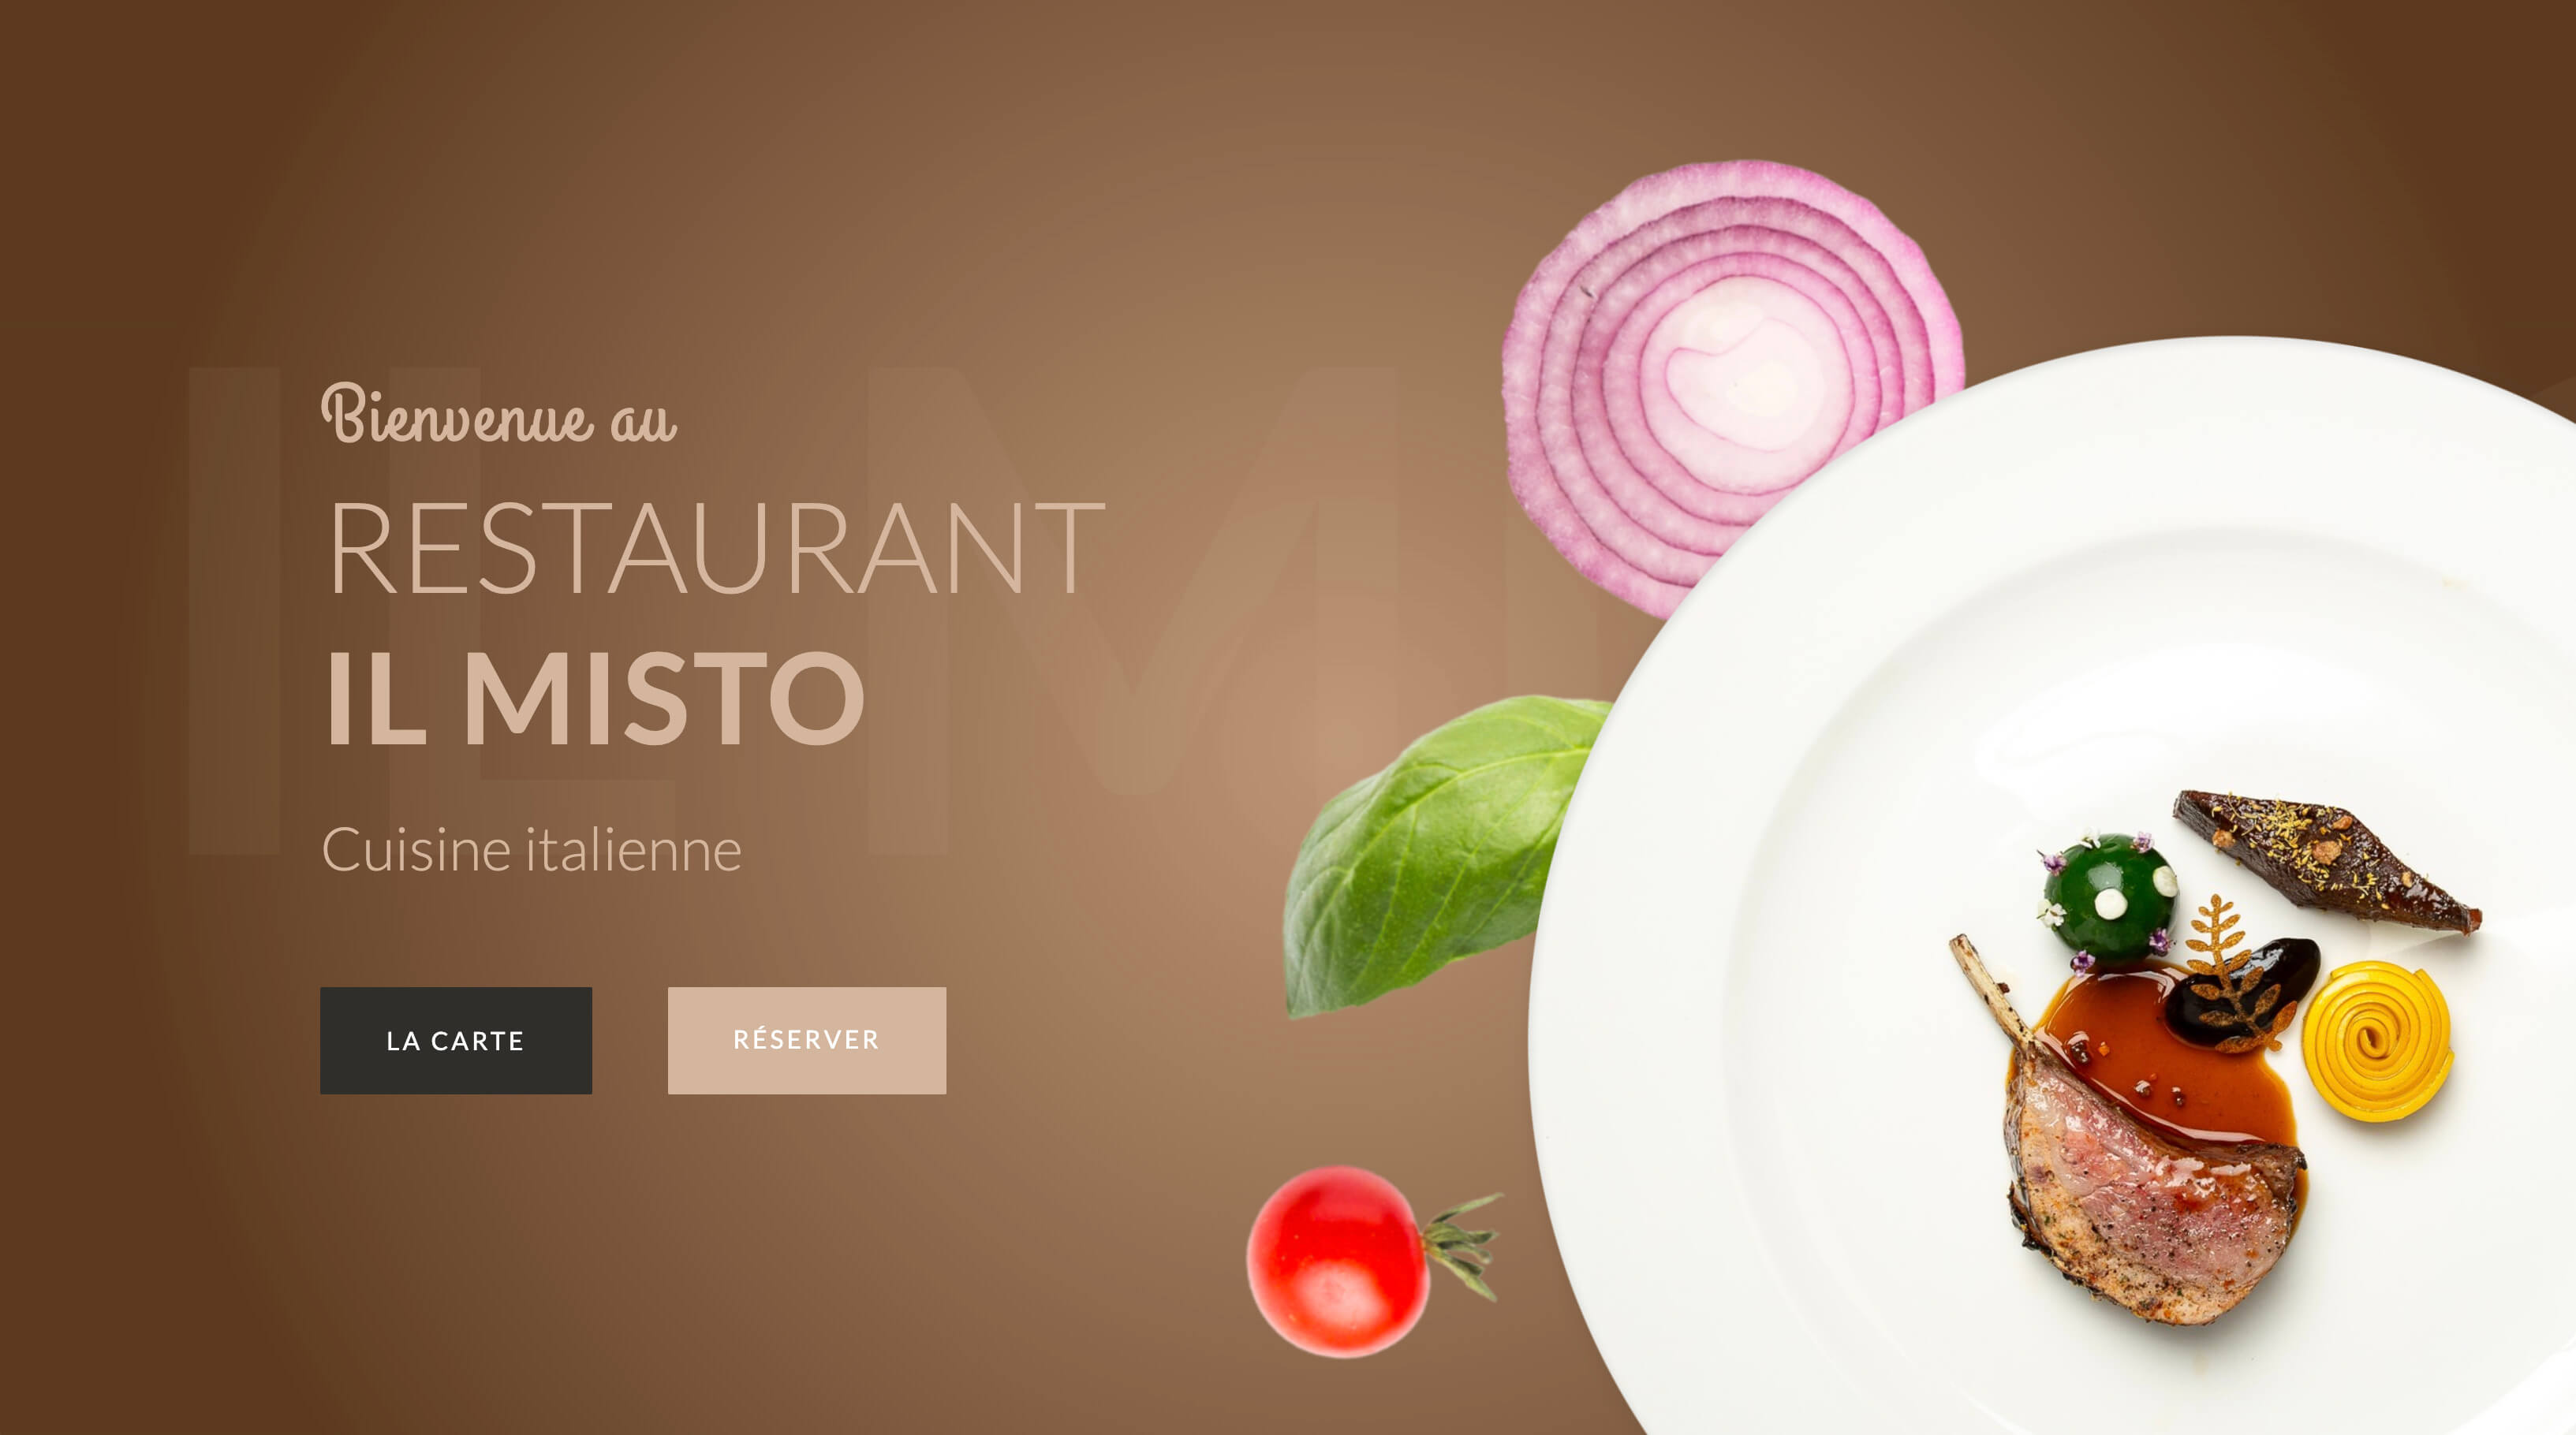 Créer un menu de restaurant avec Wordpress et ACF